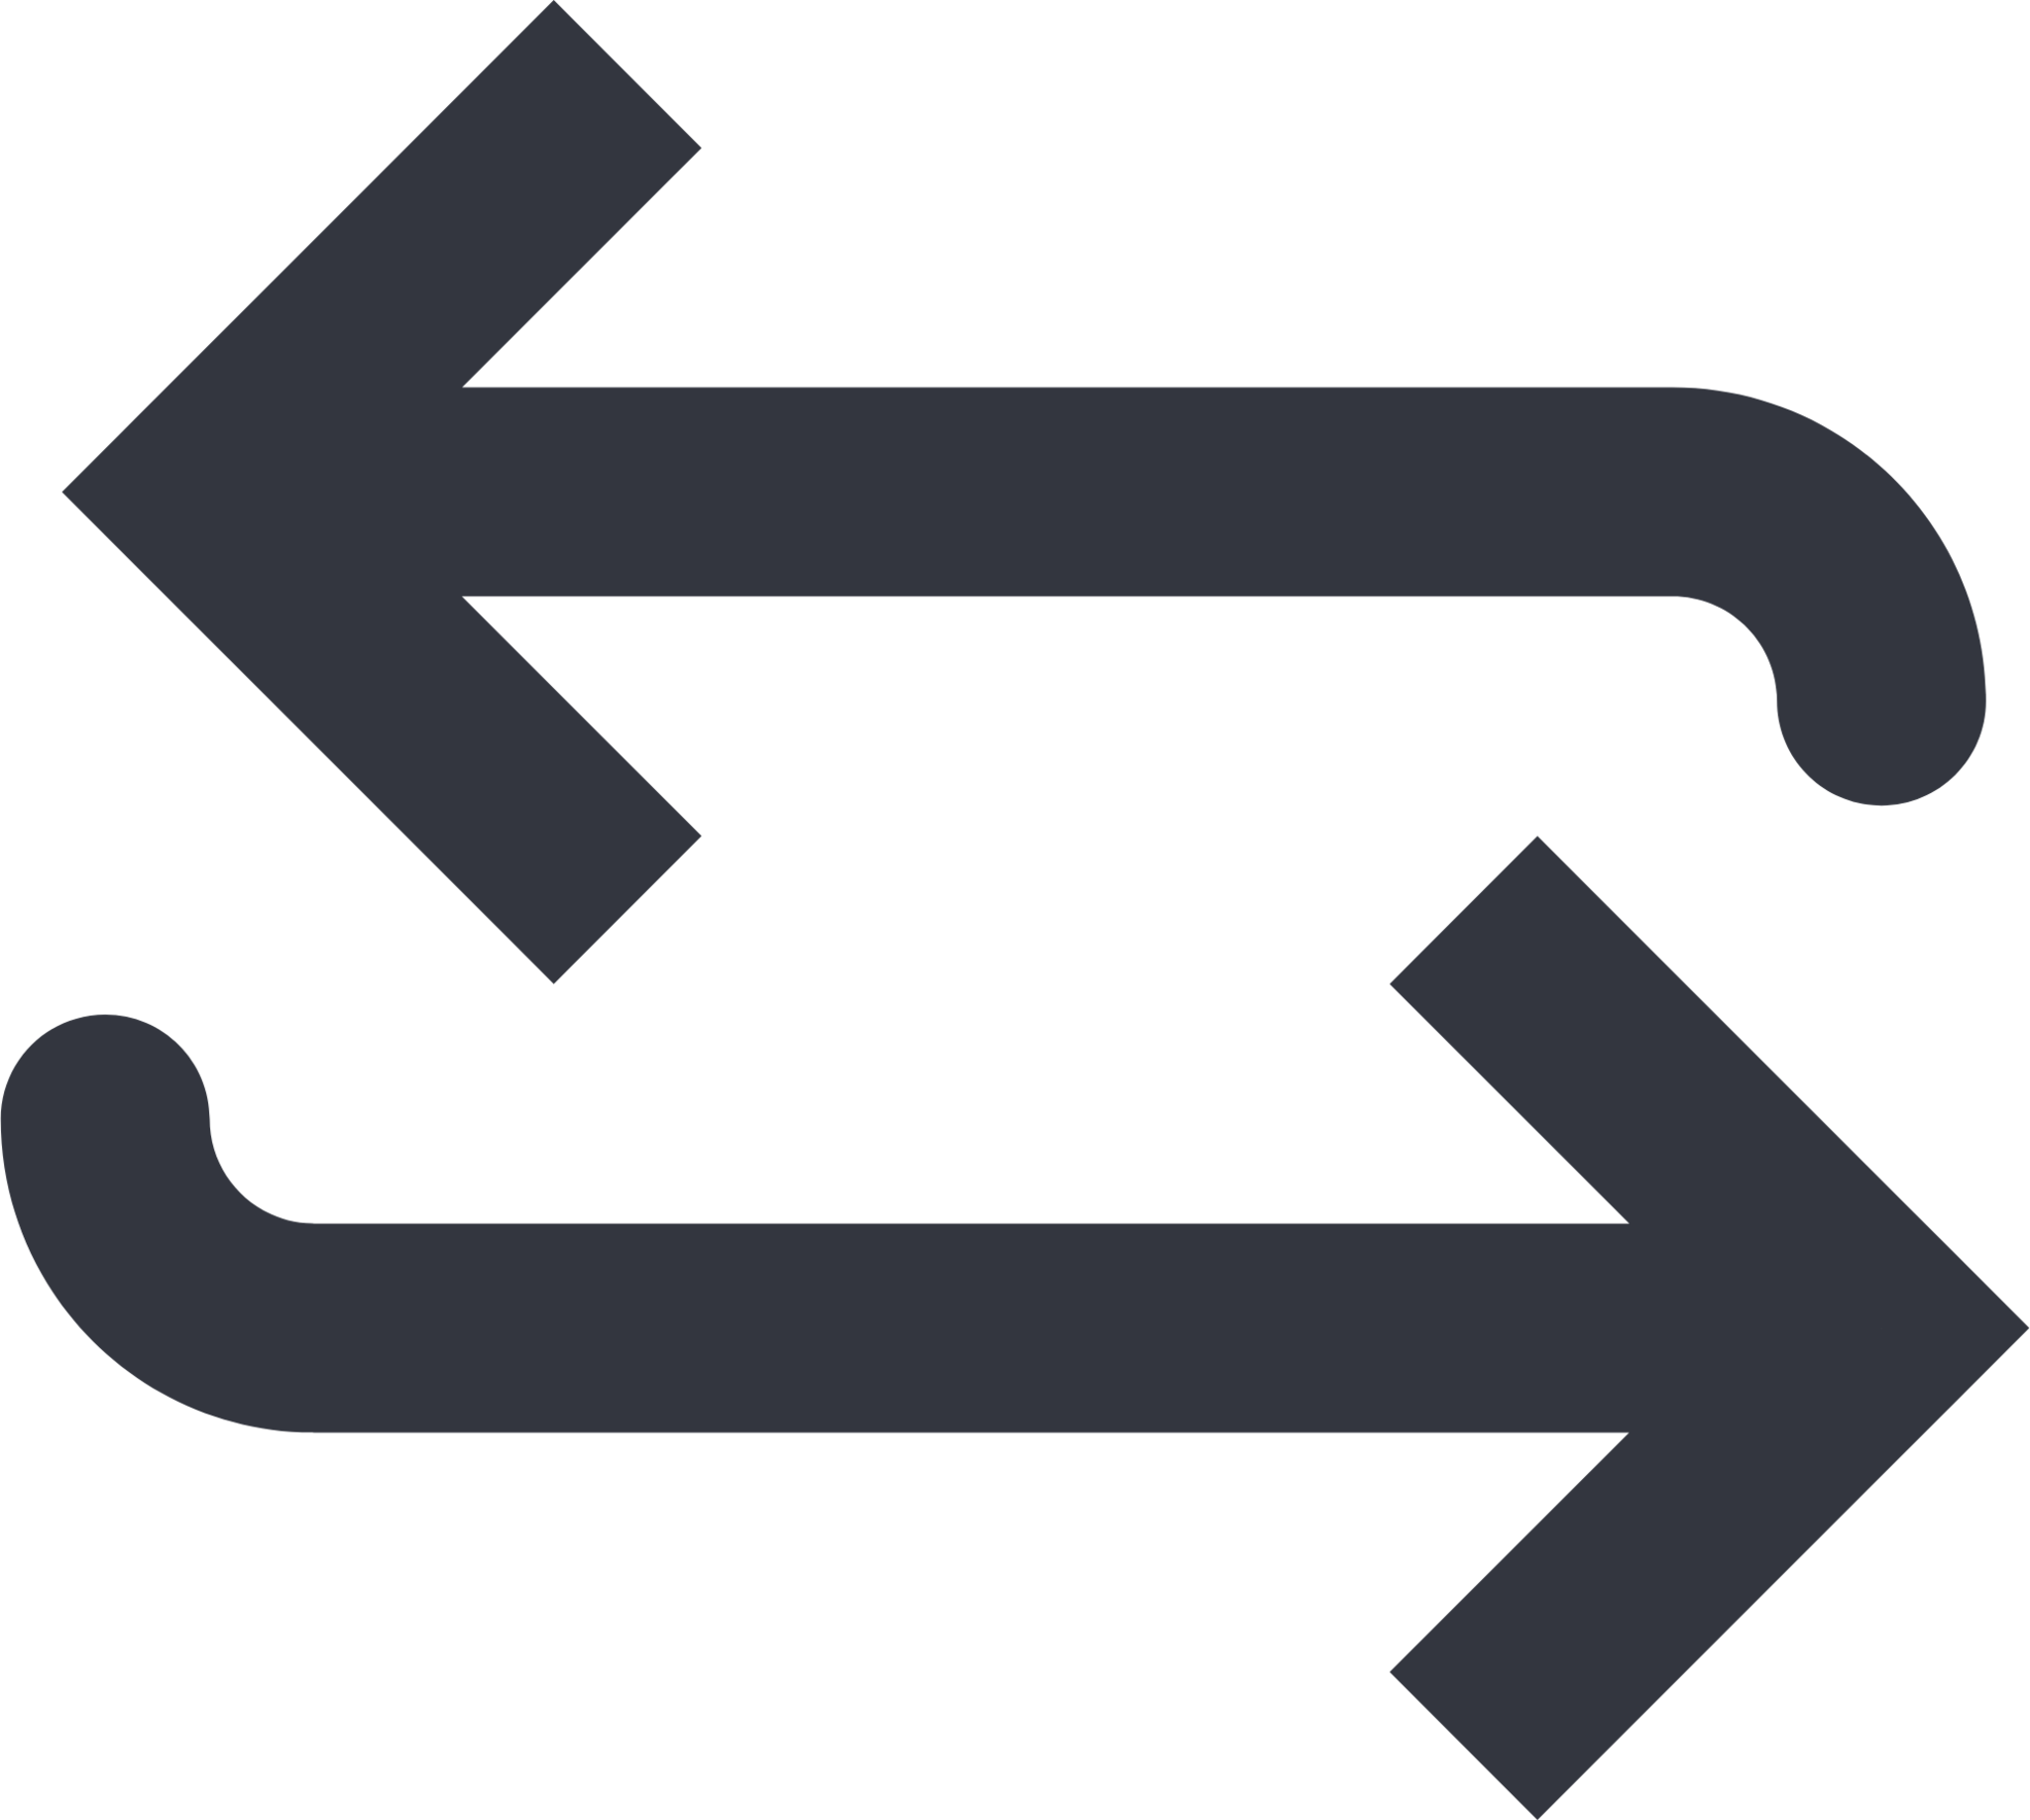 Horizontal switch icon